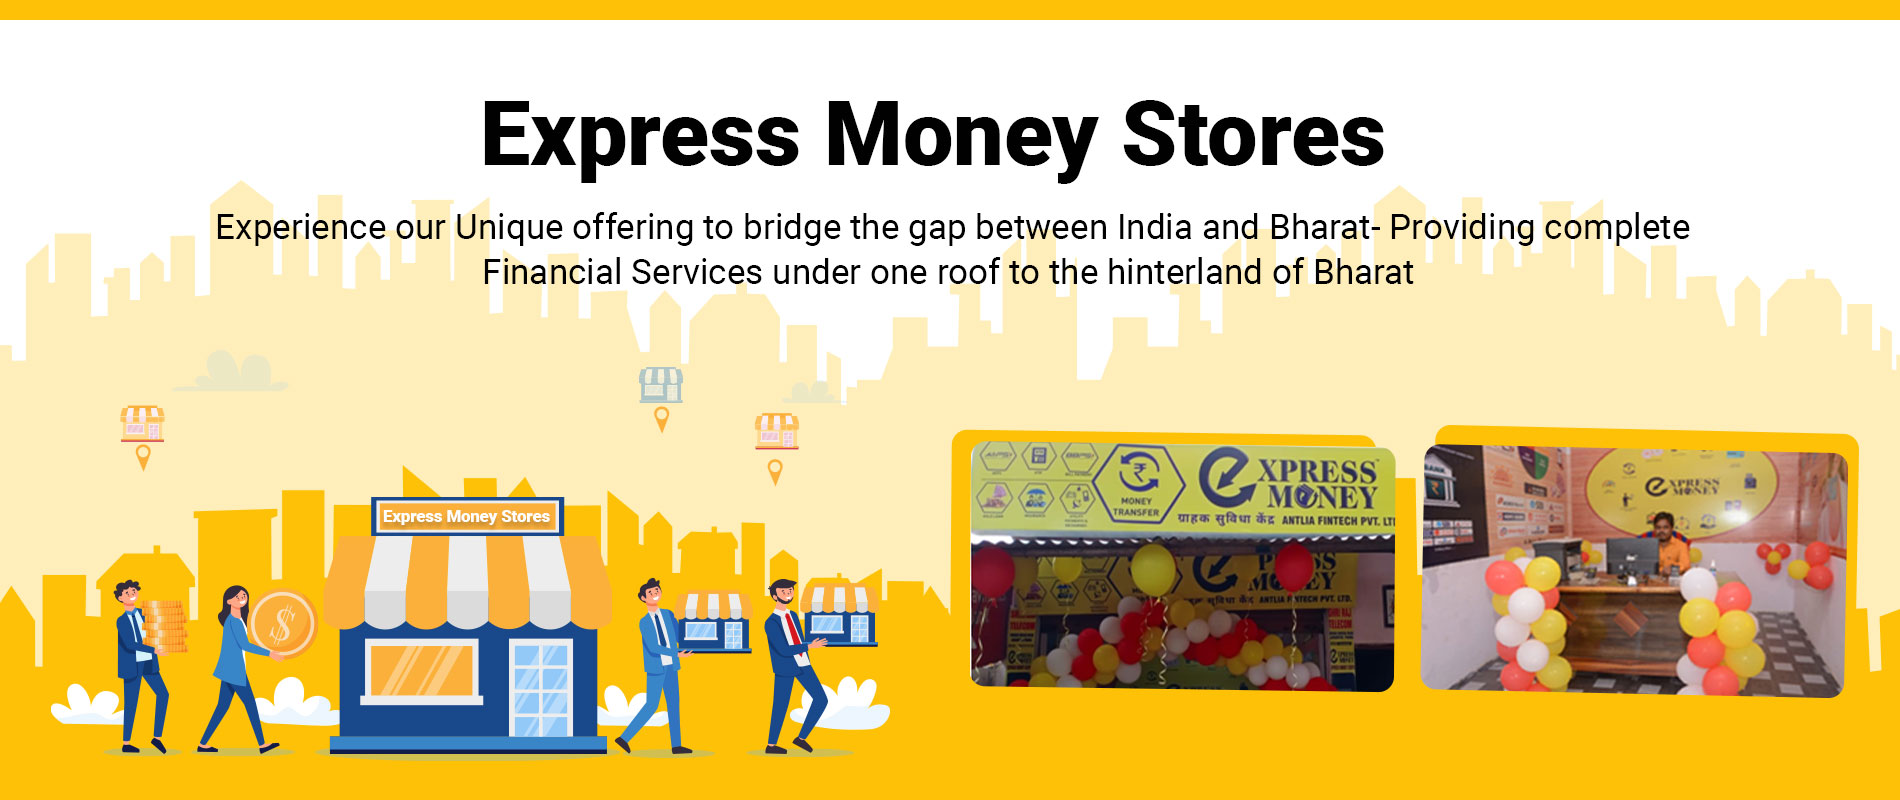 Express Money Stores